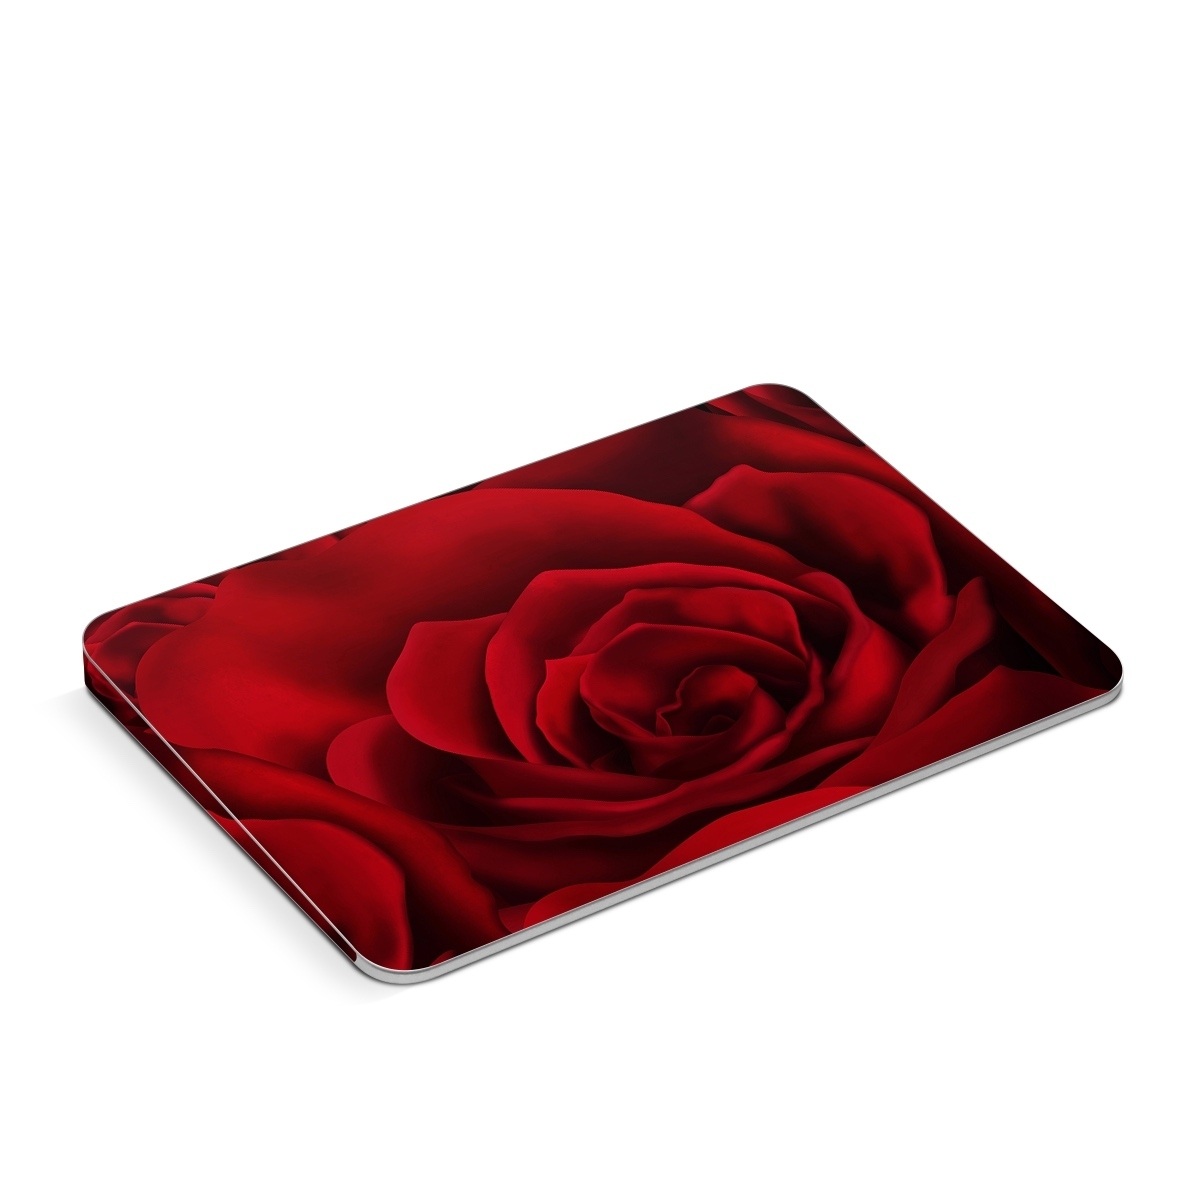 Apple Magic Trackpad Skin design of Red, Garden roses, Rose, Petal, Flower, Nature, Floribunda, Rose family, Close-up, Plant, with black, red colors